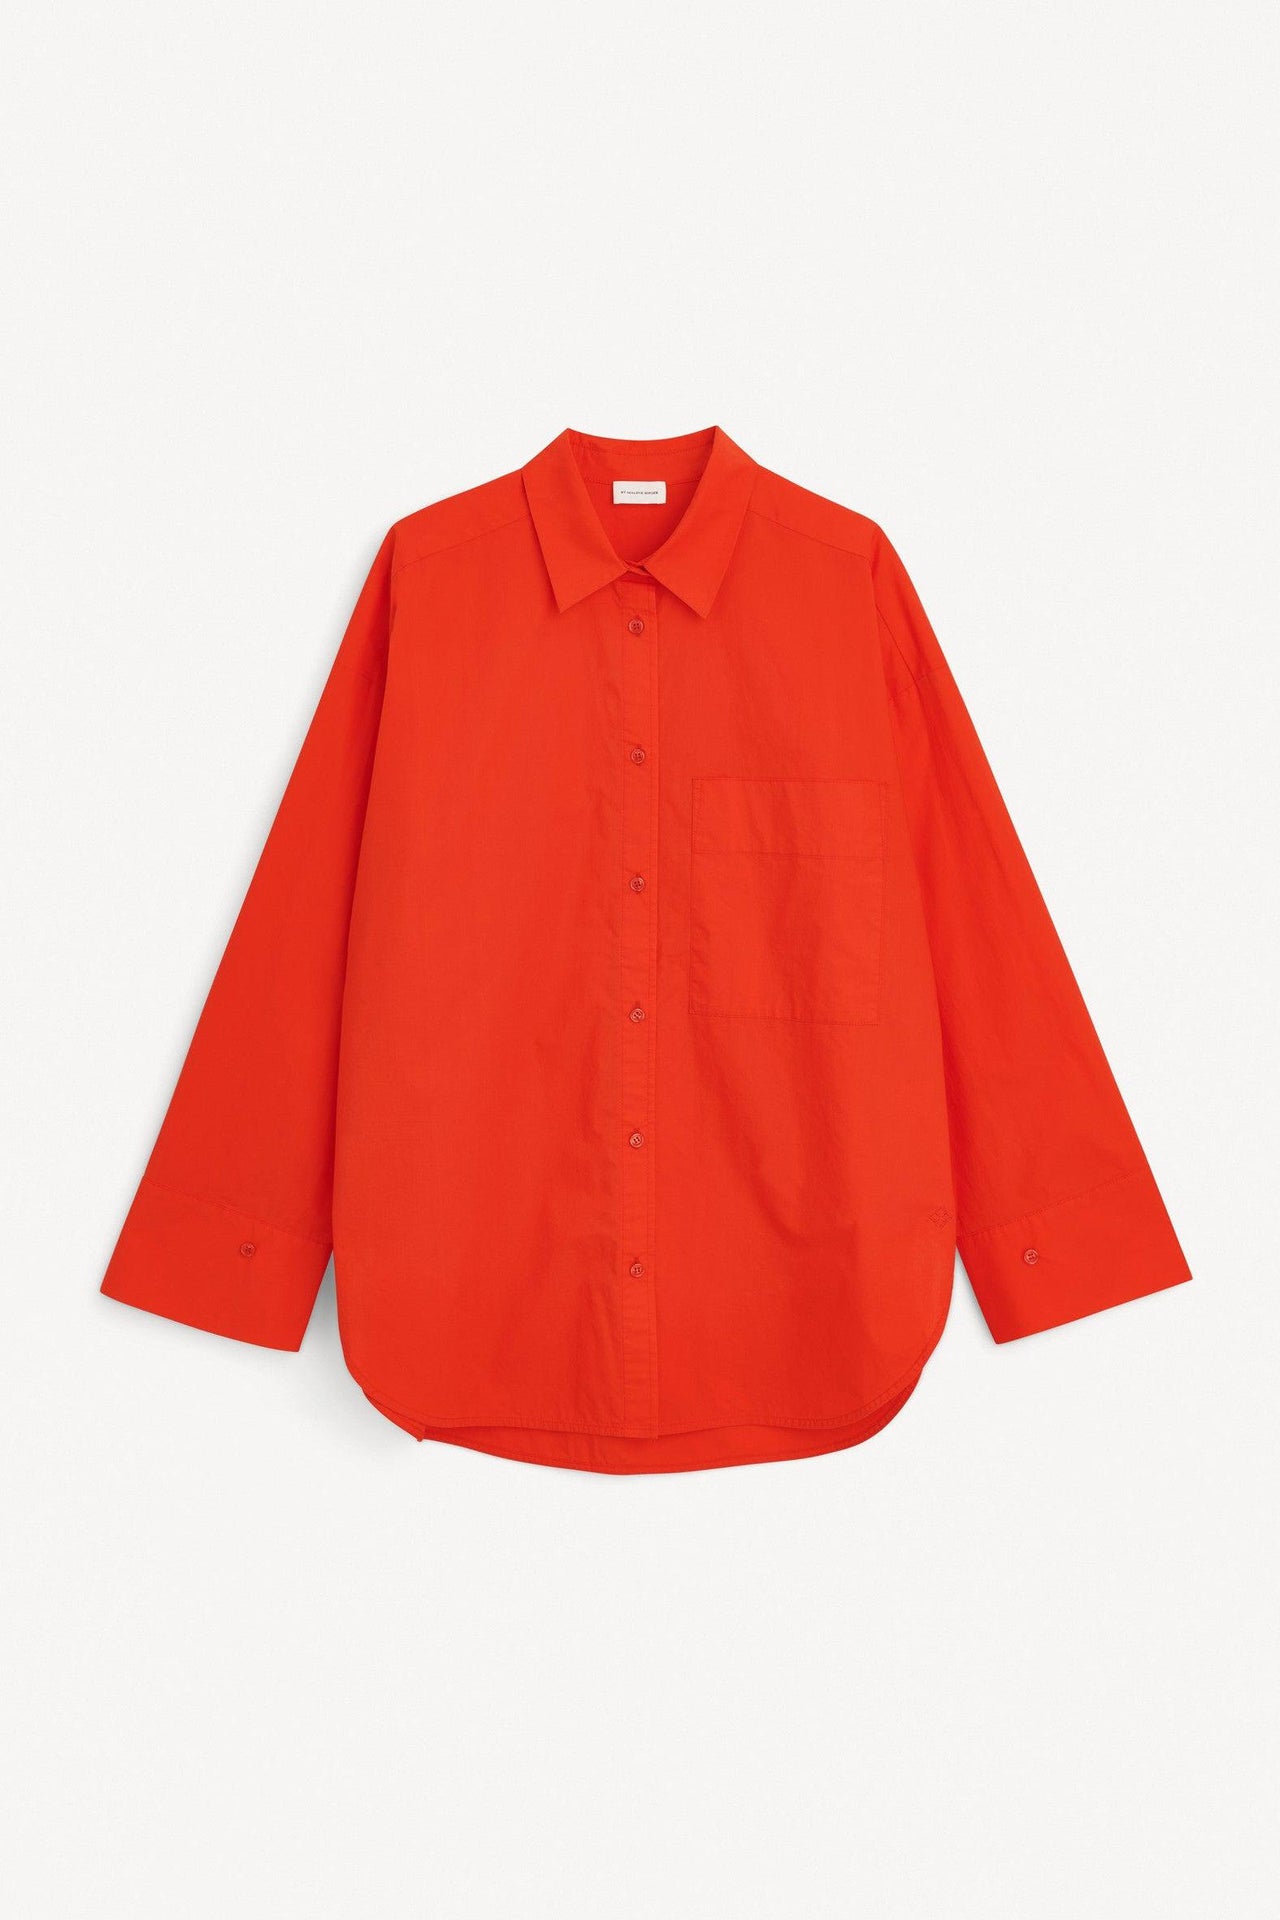 DERRIS SHIRT in 83H-Shirt-By Malene Birger-Debs Boutique